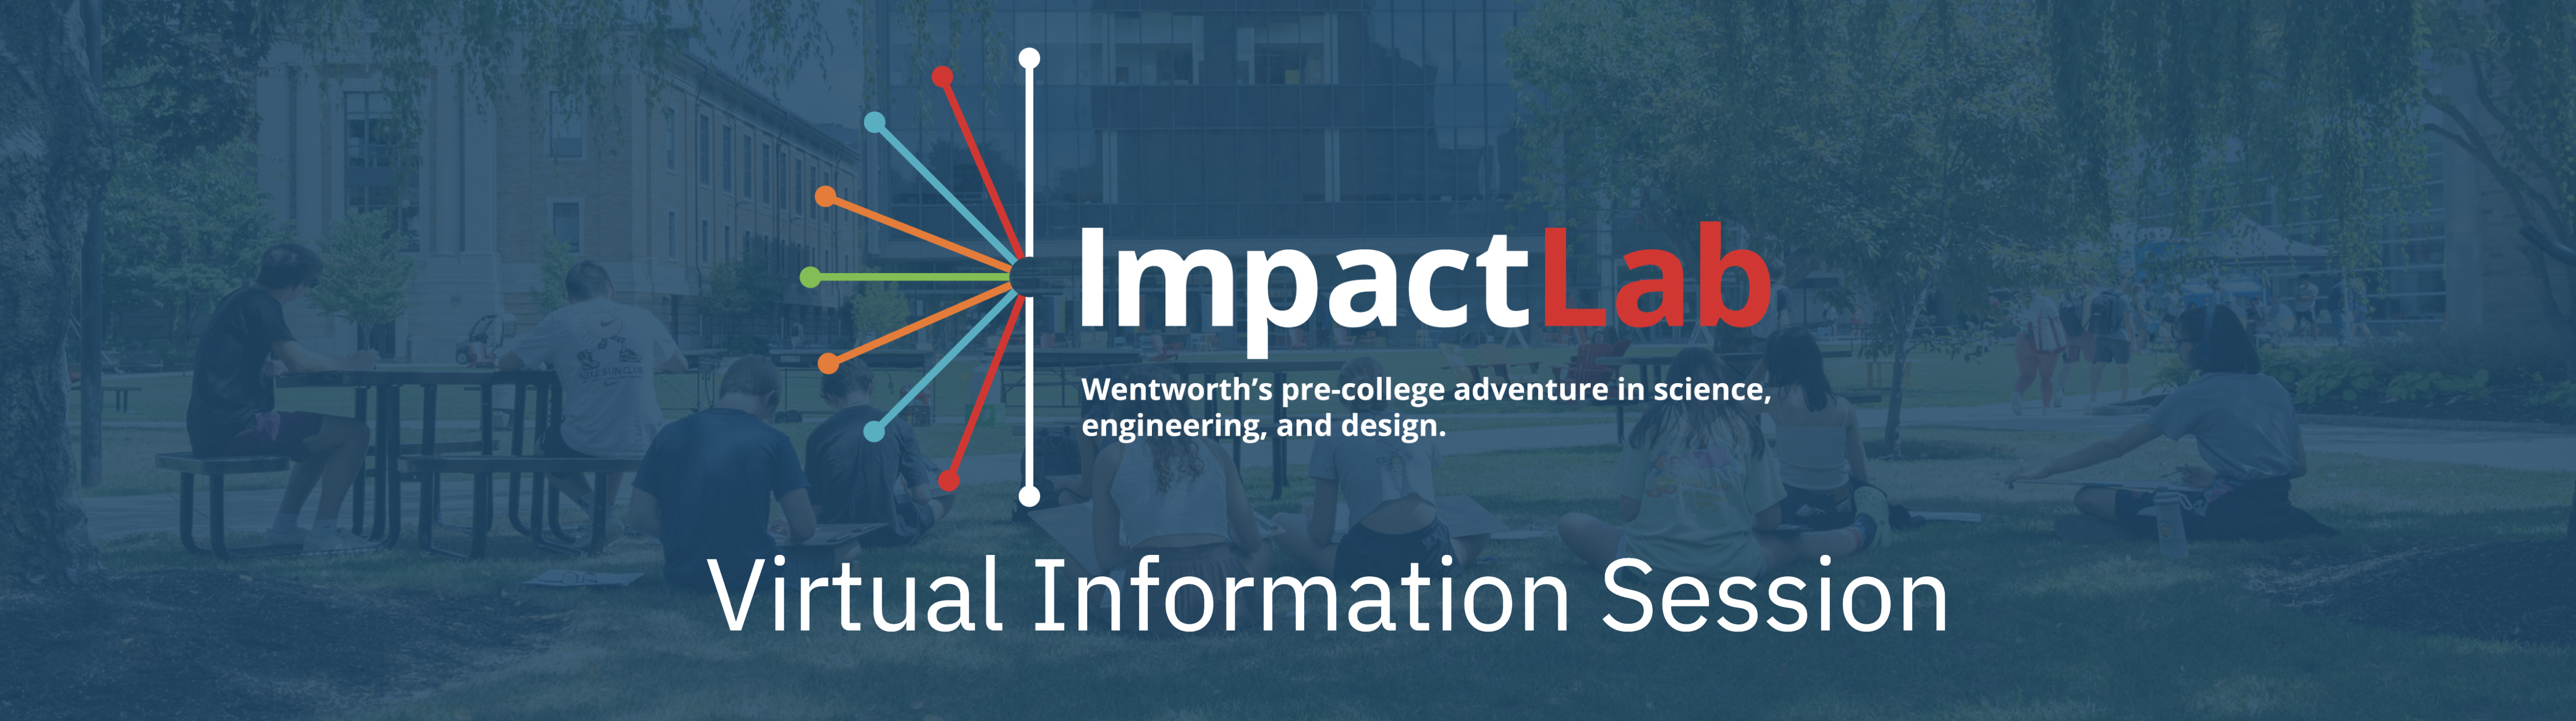 ImpactLab Logo - Virtual Information Sessions